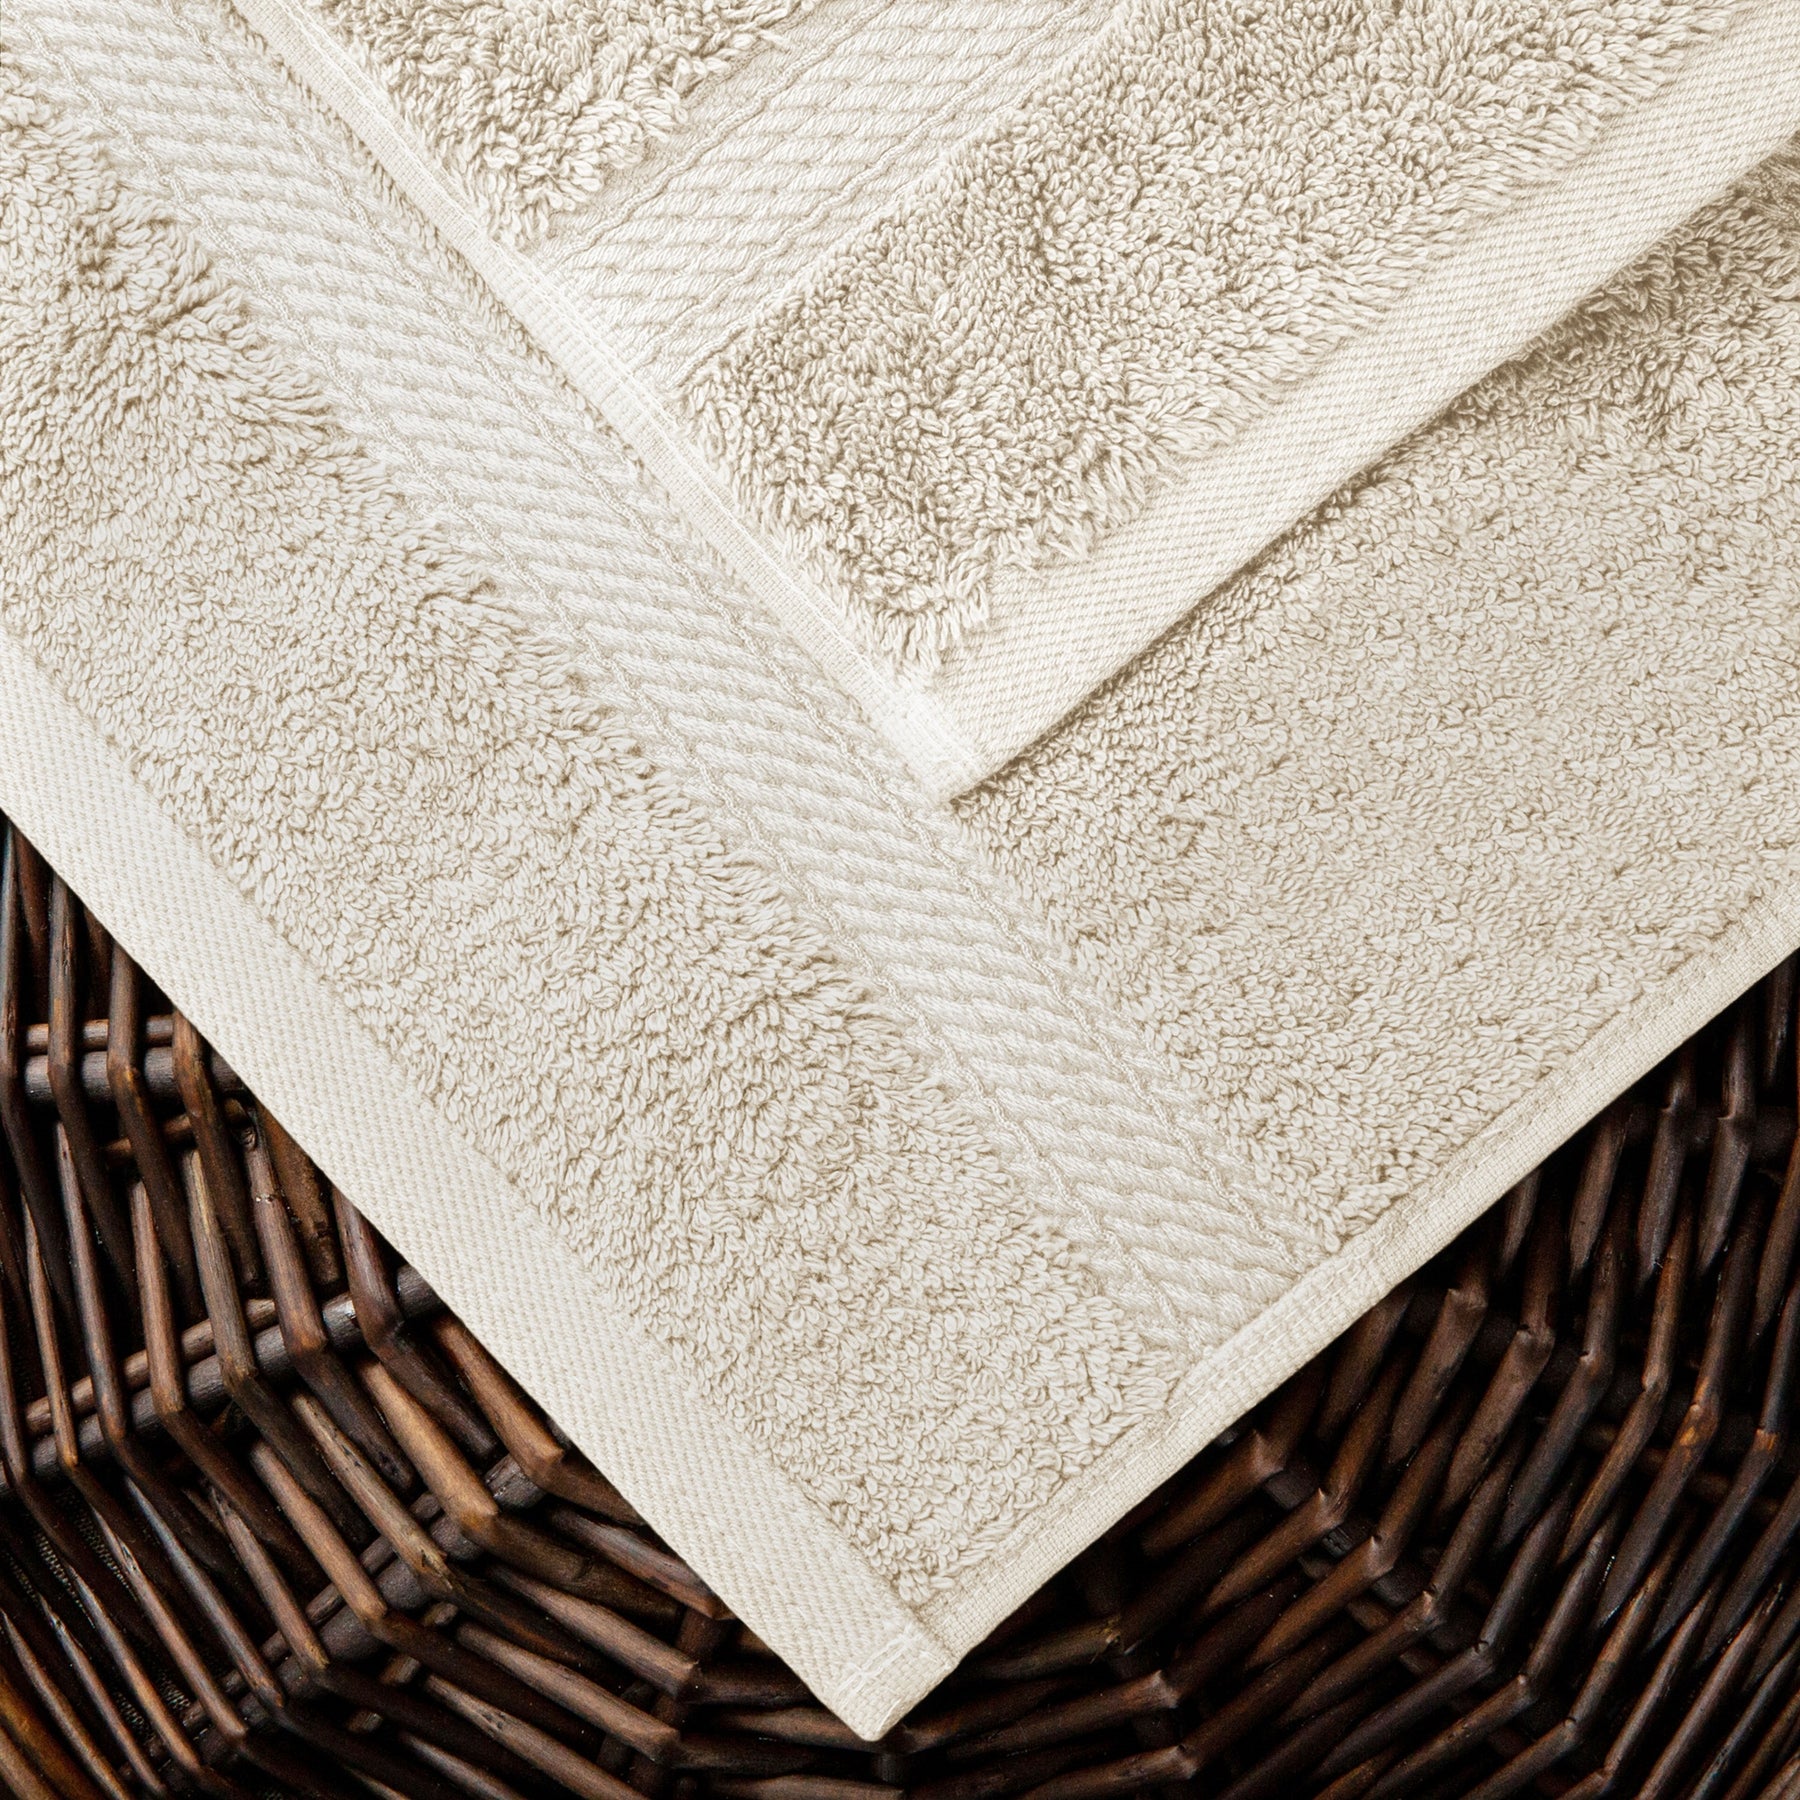 Egyptian Cotton Heavyweight 10 Piece Bath Towel Set - Cream